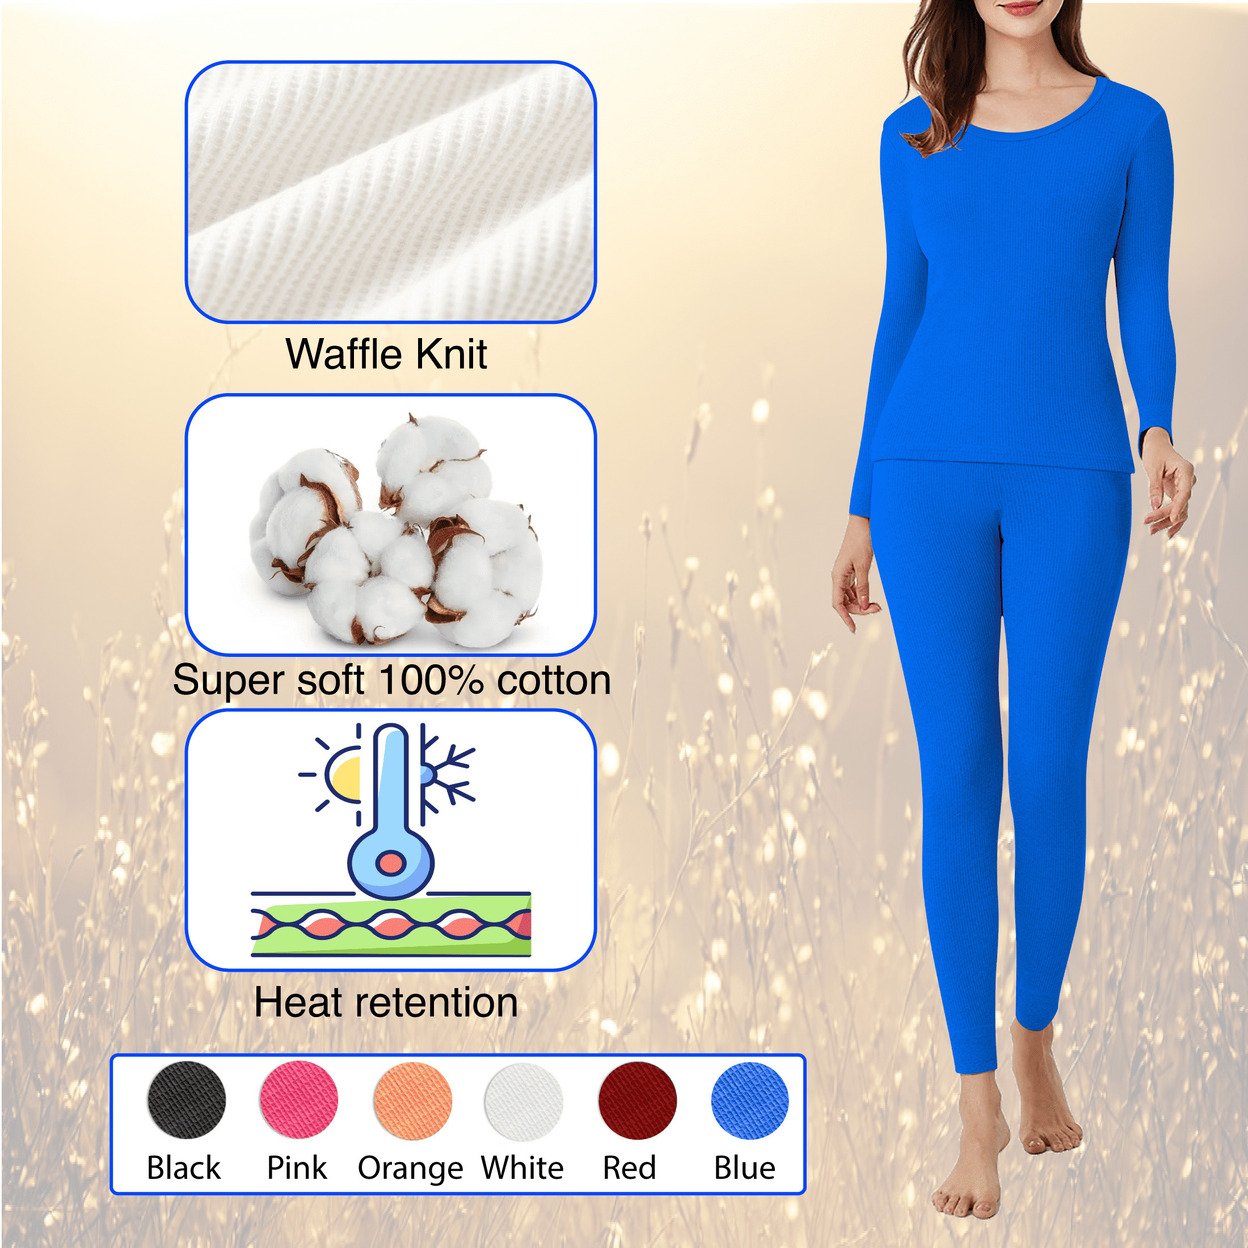 2-Piece: Women's Ultra Soft Cotton Waffle Knit Thermal Sets - Pink, Small